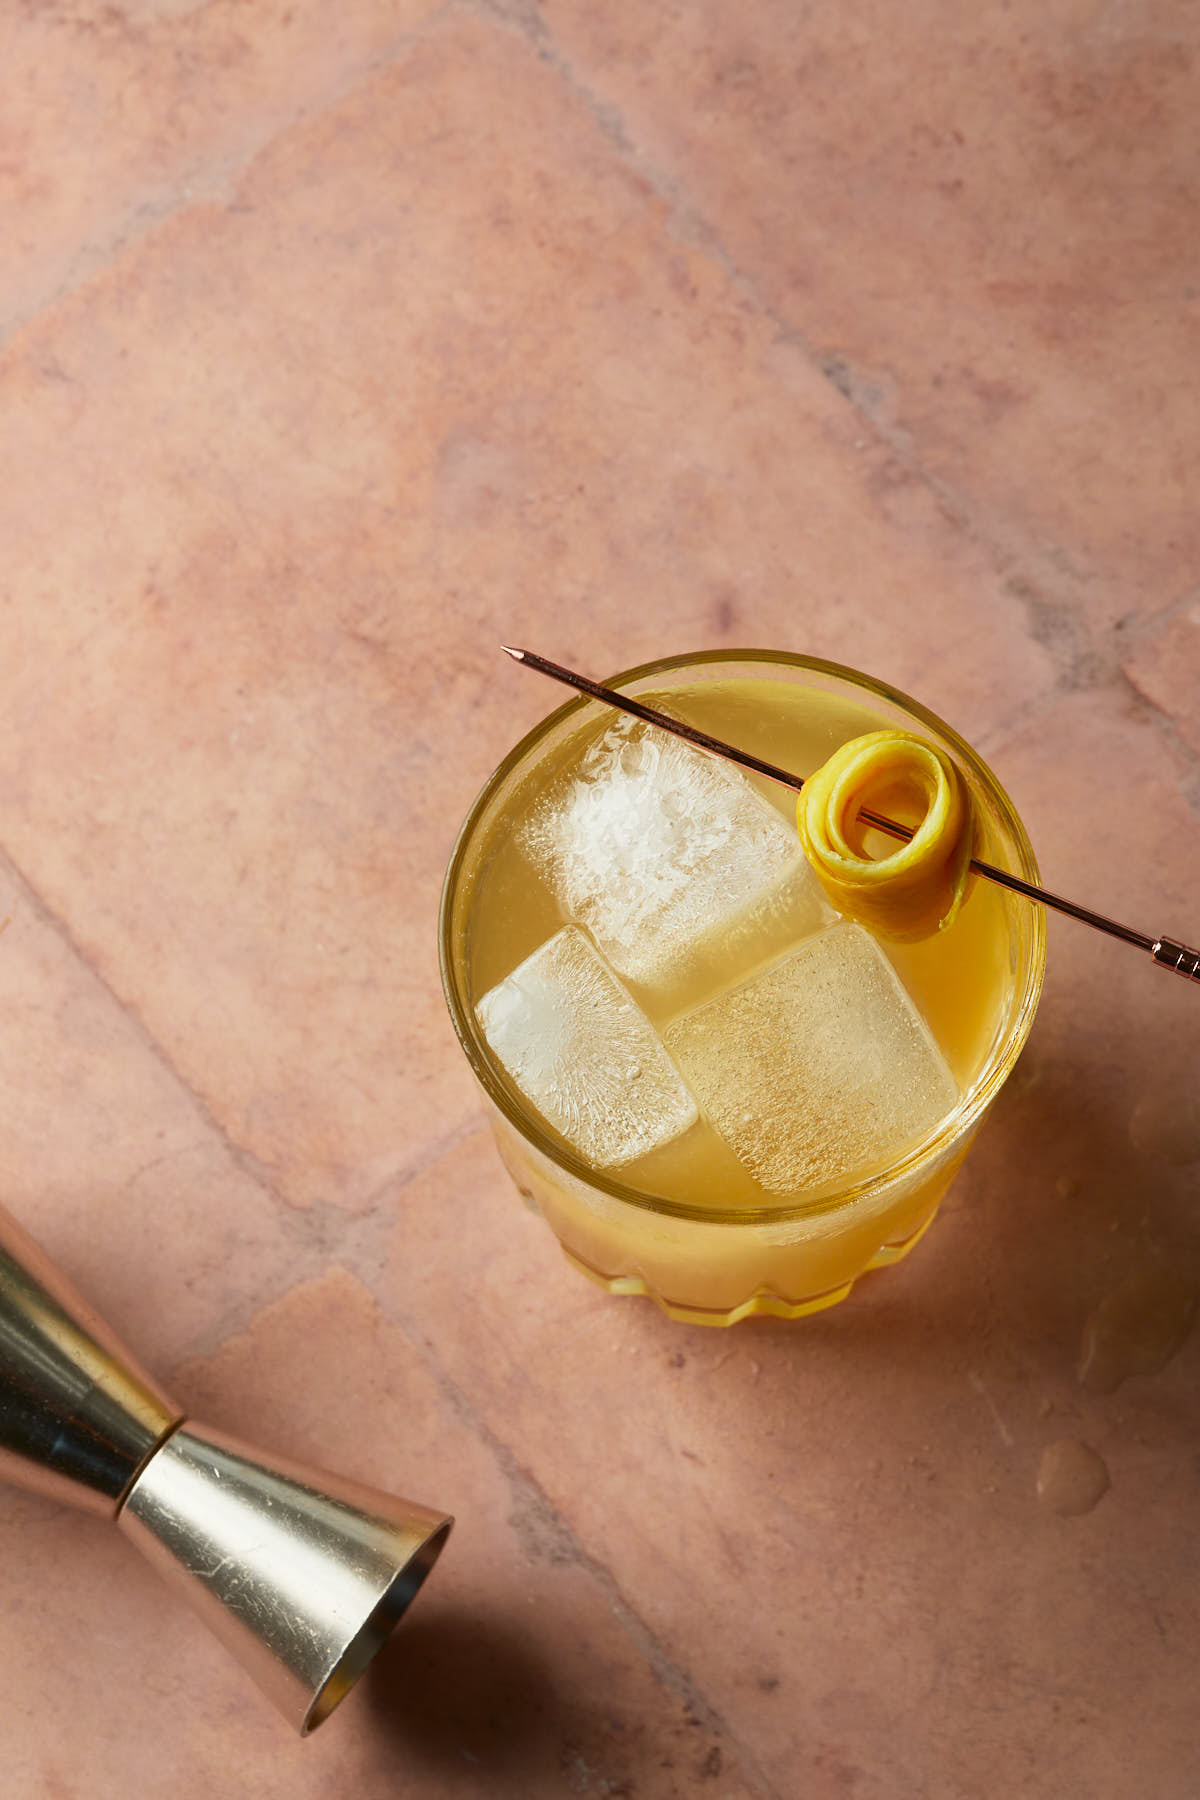 A penicillin cocktail garnished with a lemon peel rose. 